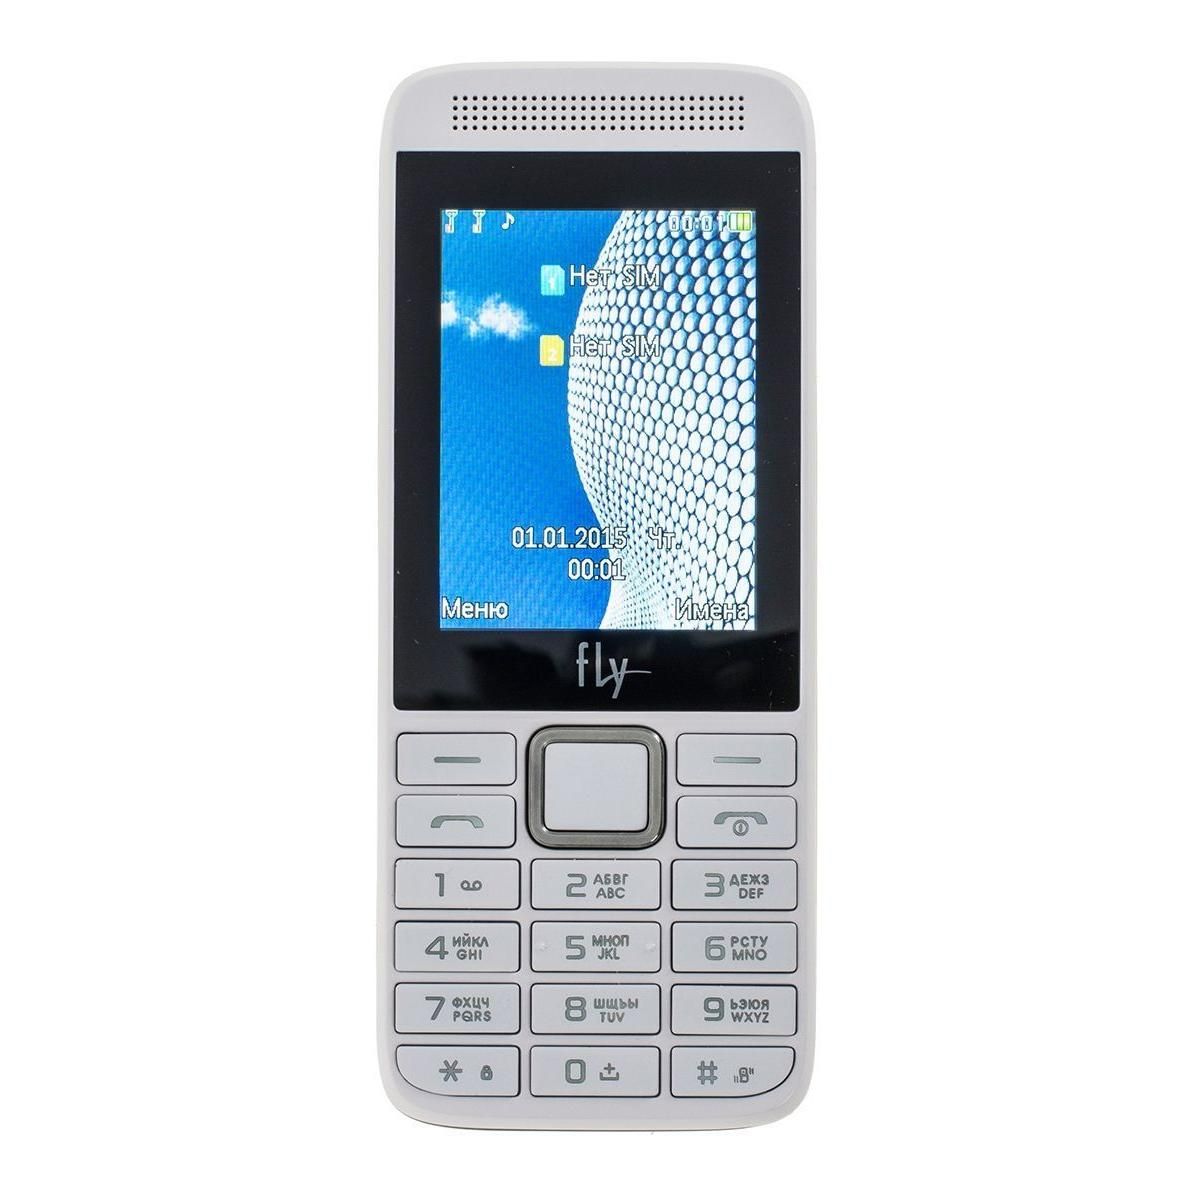 Обзор GSM-телефона Fly E300